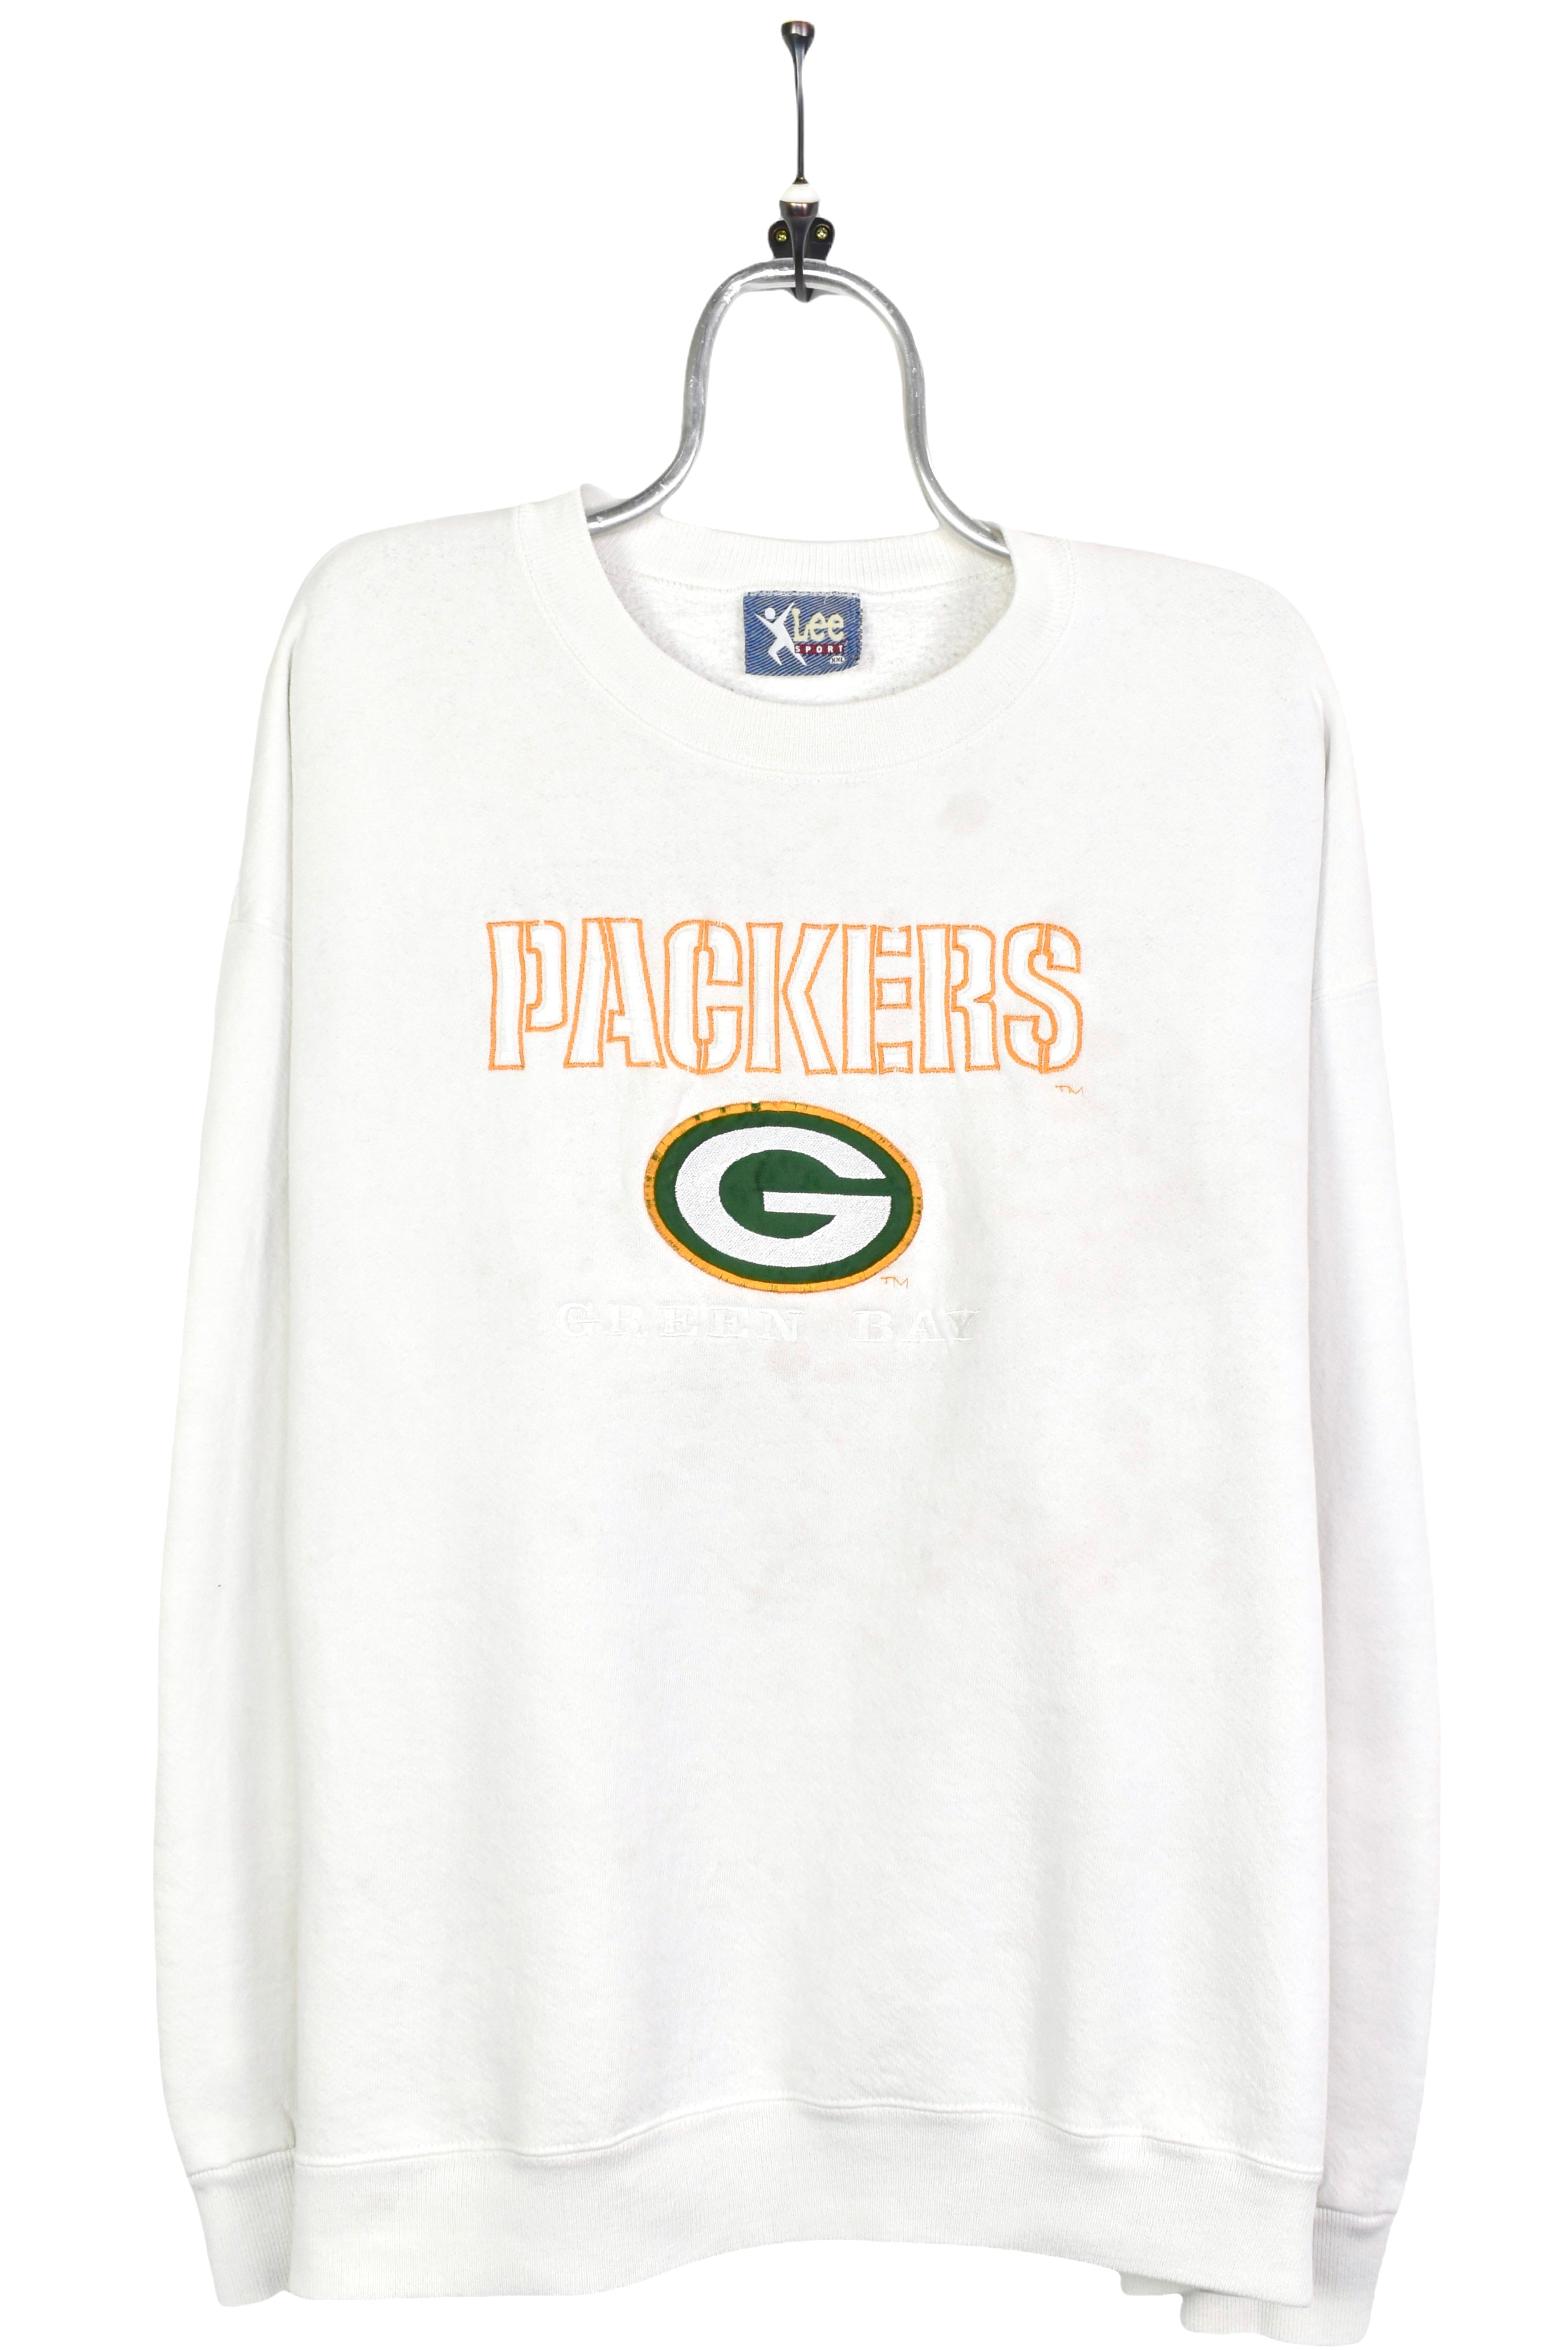 Vintage Green Bay Packers sweatshirt, NFL embroidered crewneck - XXL, white PRO SPORT